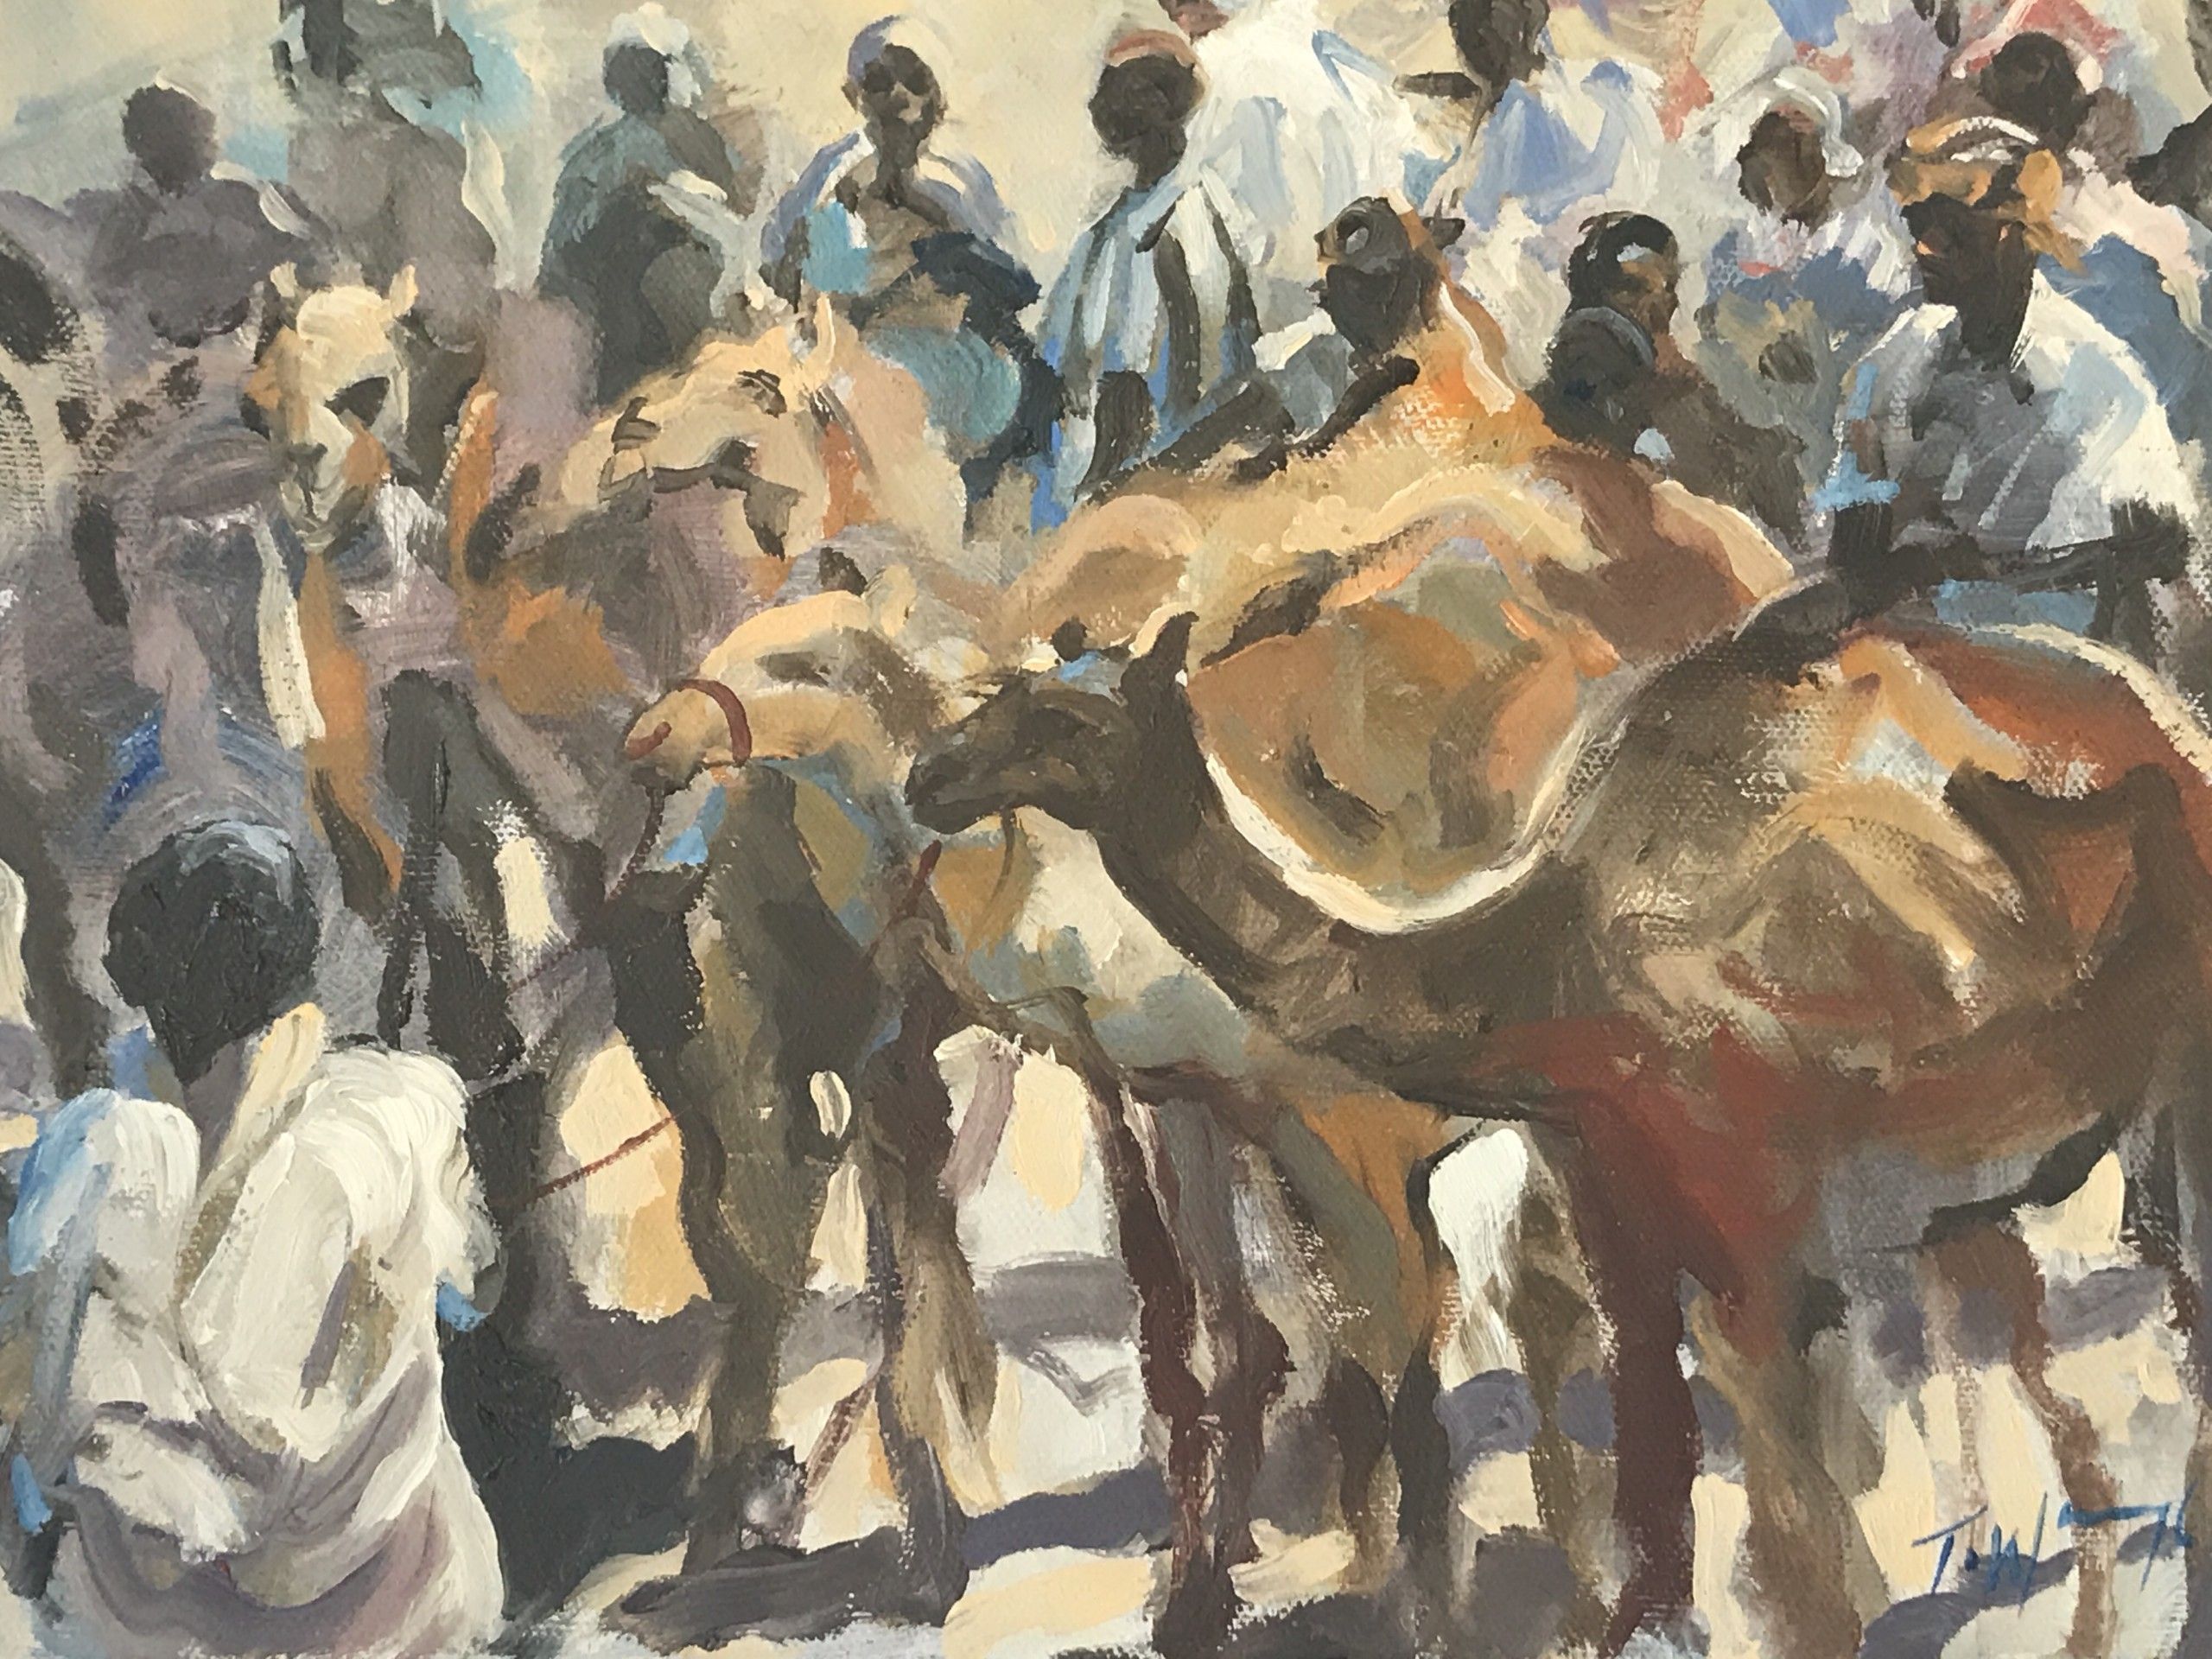 Market in Morocco by Trevor Waugh